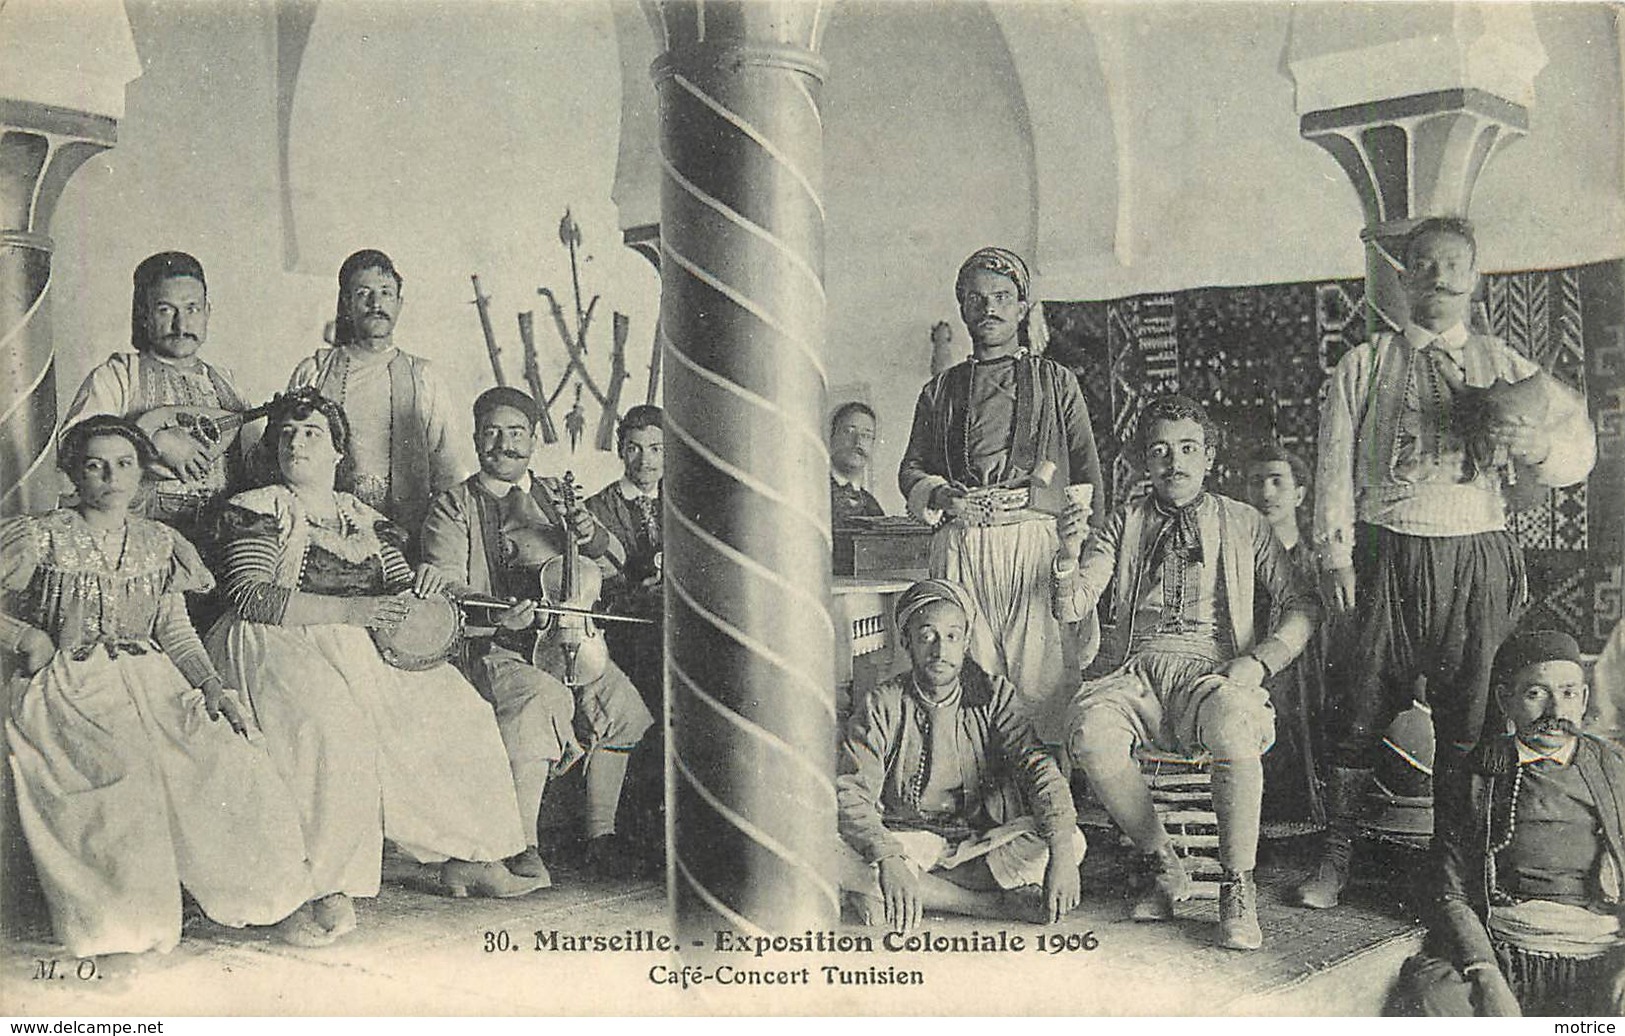 MARSEILLE - Exposition Coloniale 1906, Café Concert Tunisien. - Weltausstellung Elektrizität 1908 U.a.